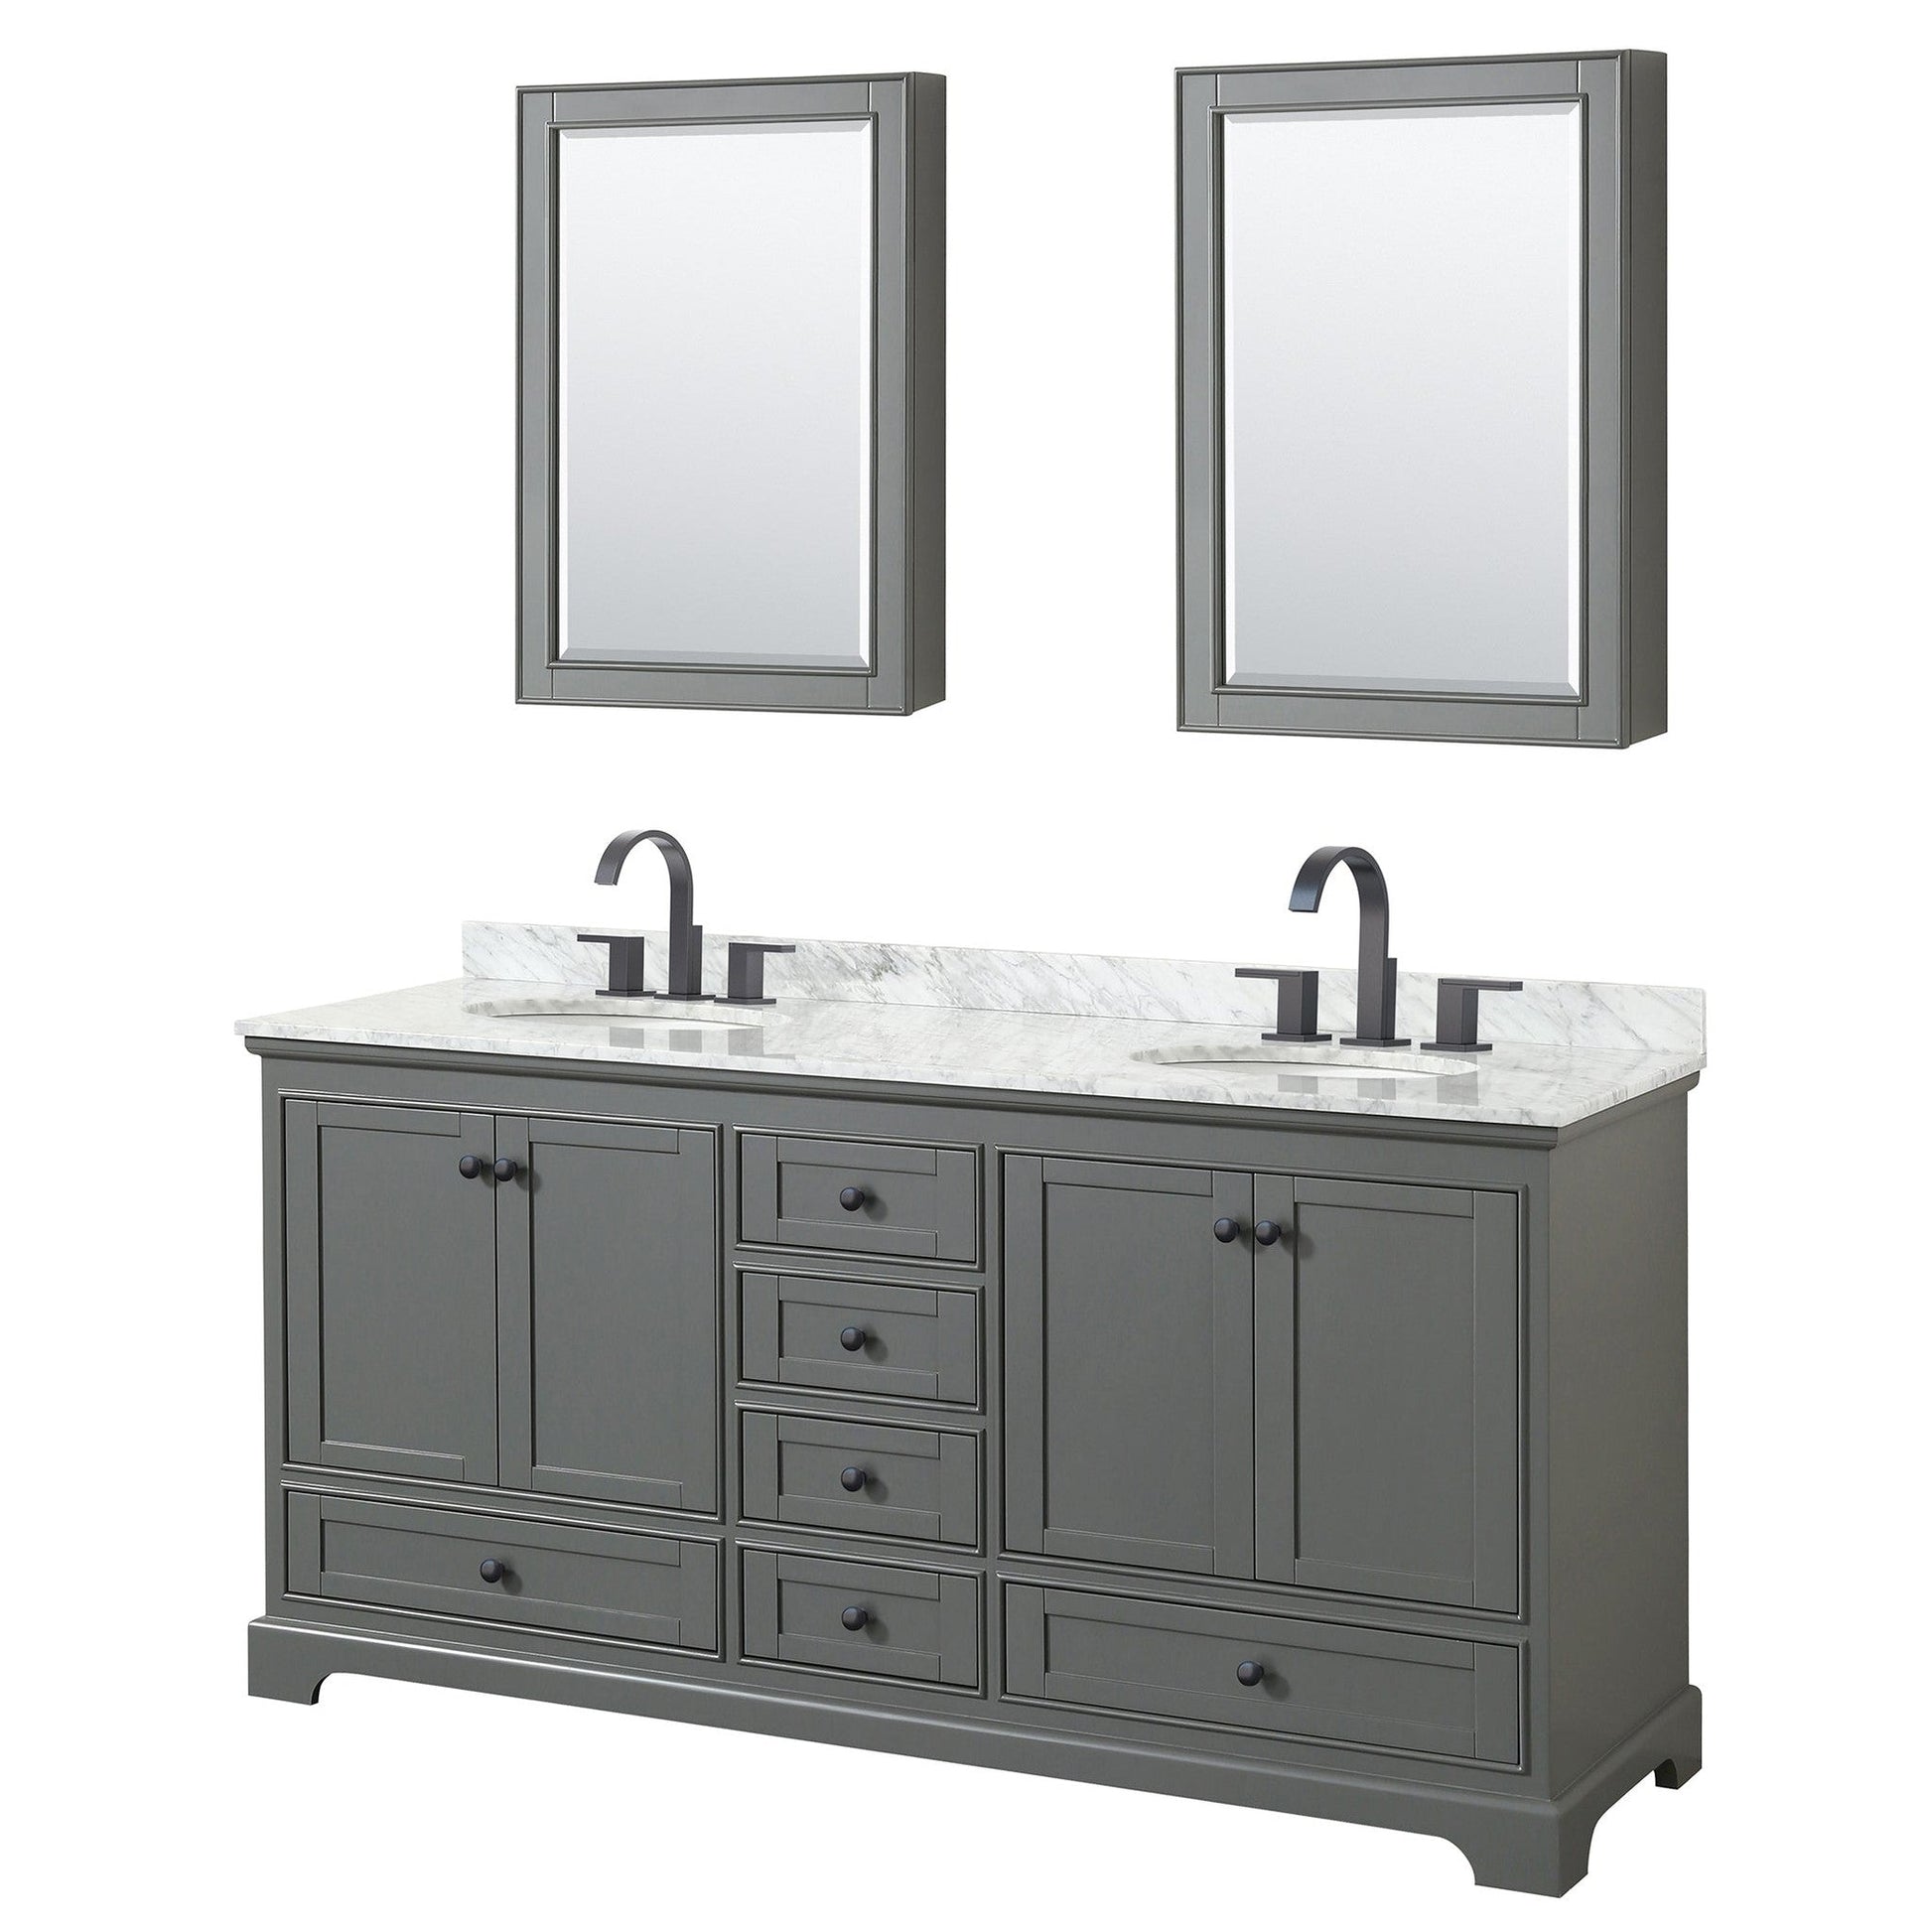 Deborah 72" Double Bathroom Vanity in Dark Gray, White Carrara Marble Countertop, Undermount Oval Sinks, Matte Black Trim, Medicine Cabinets